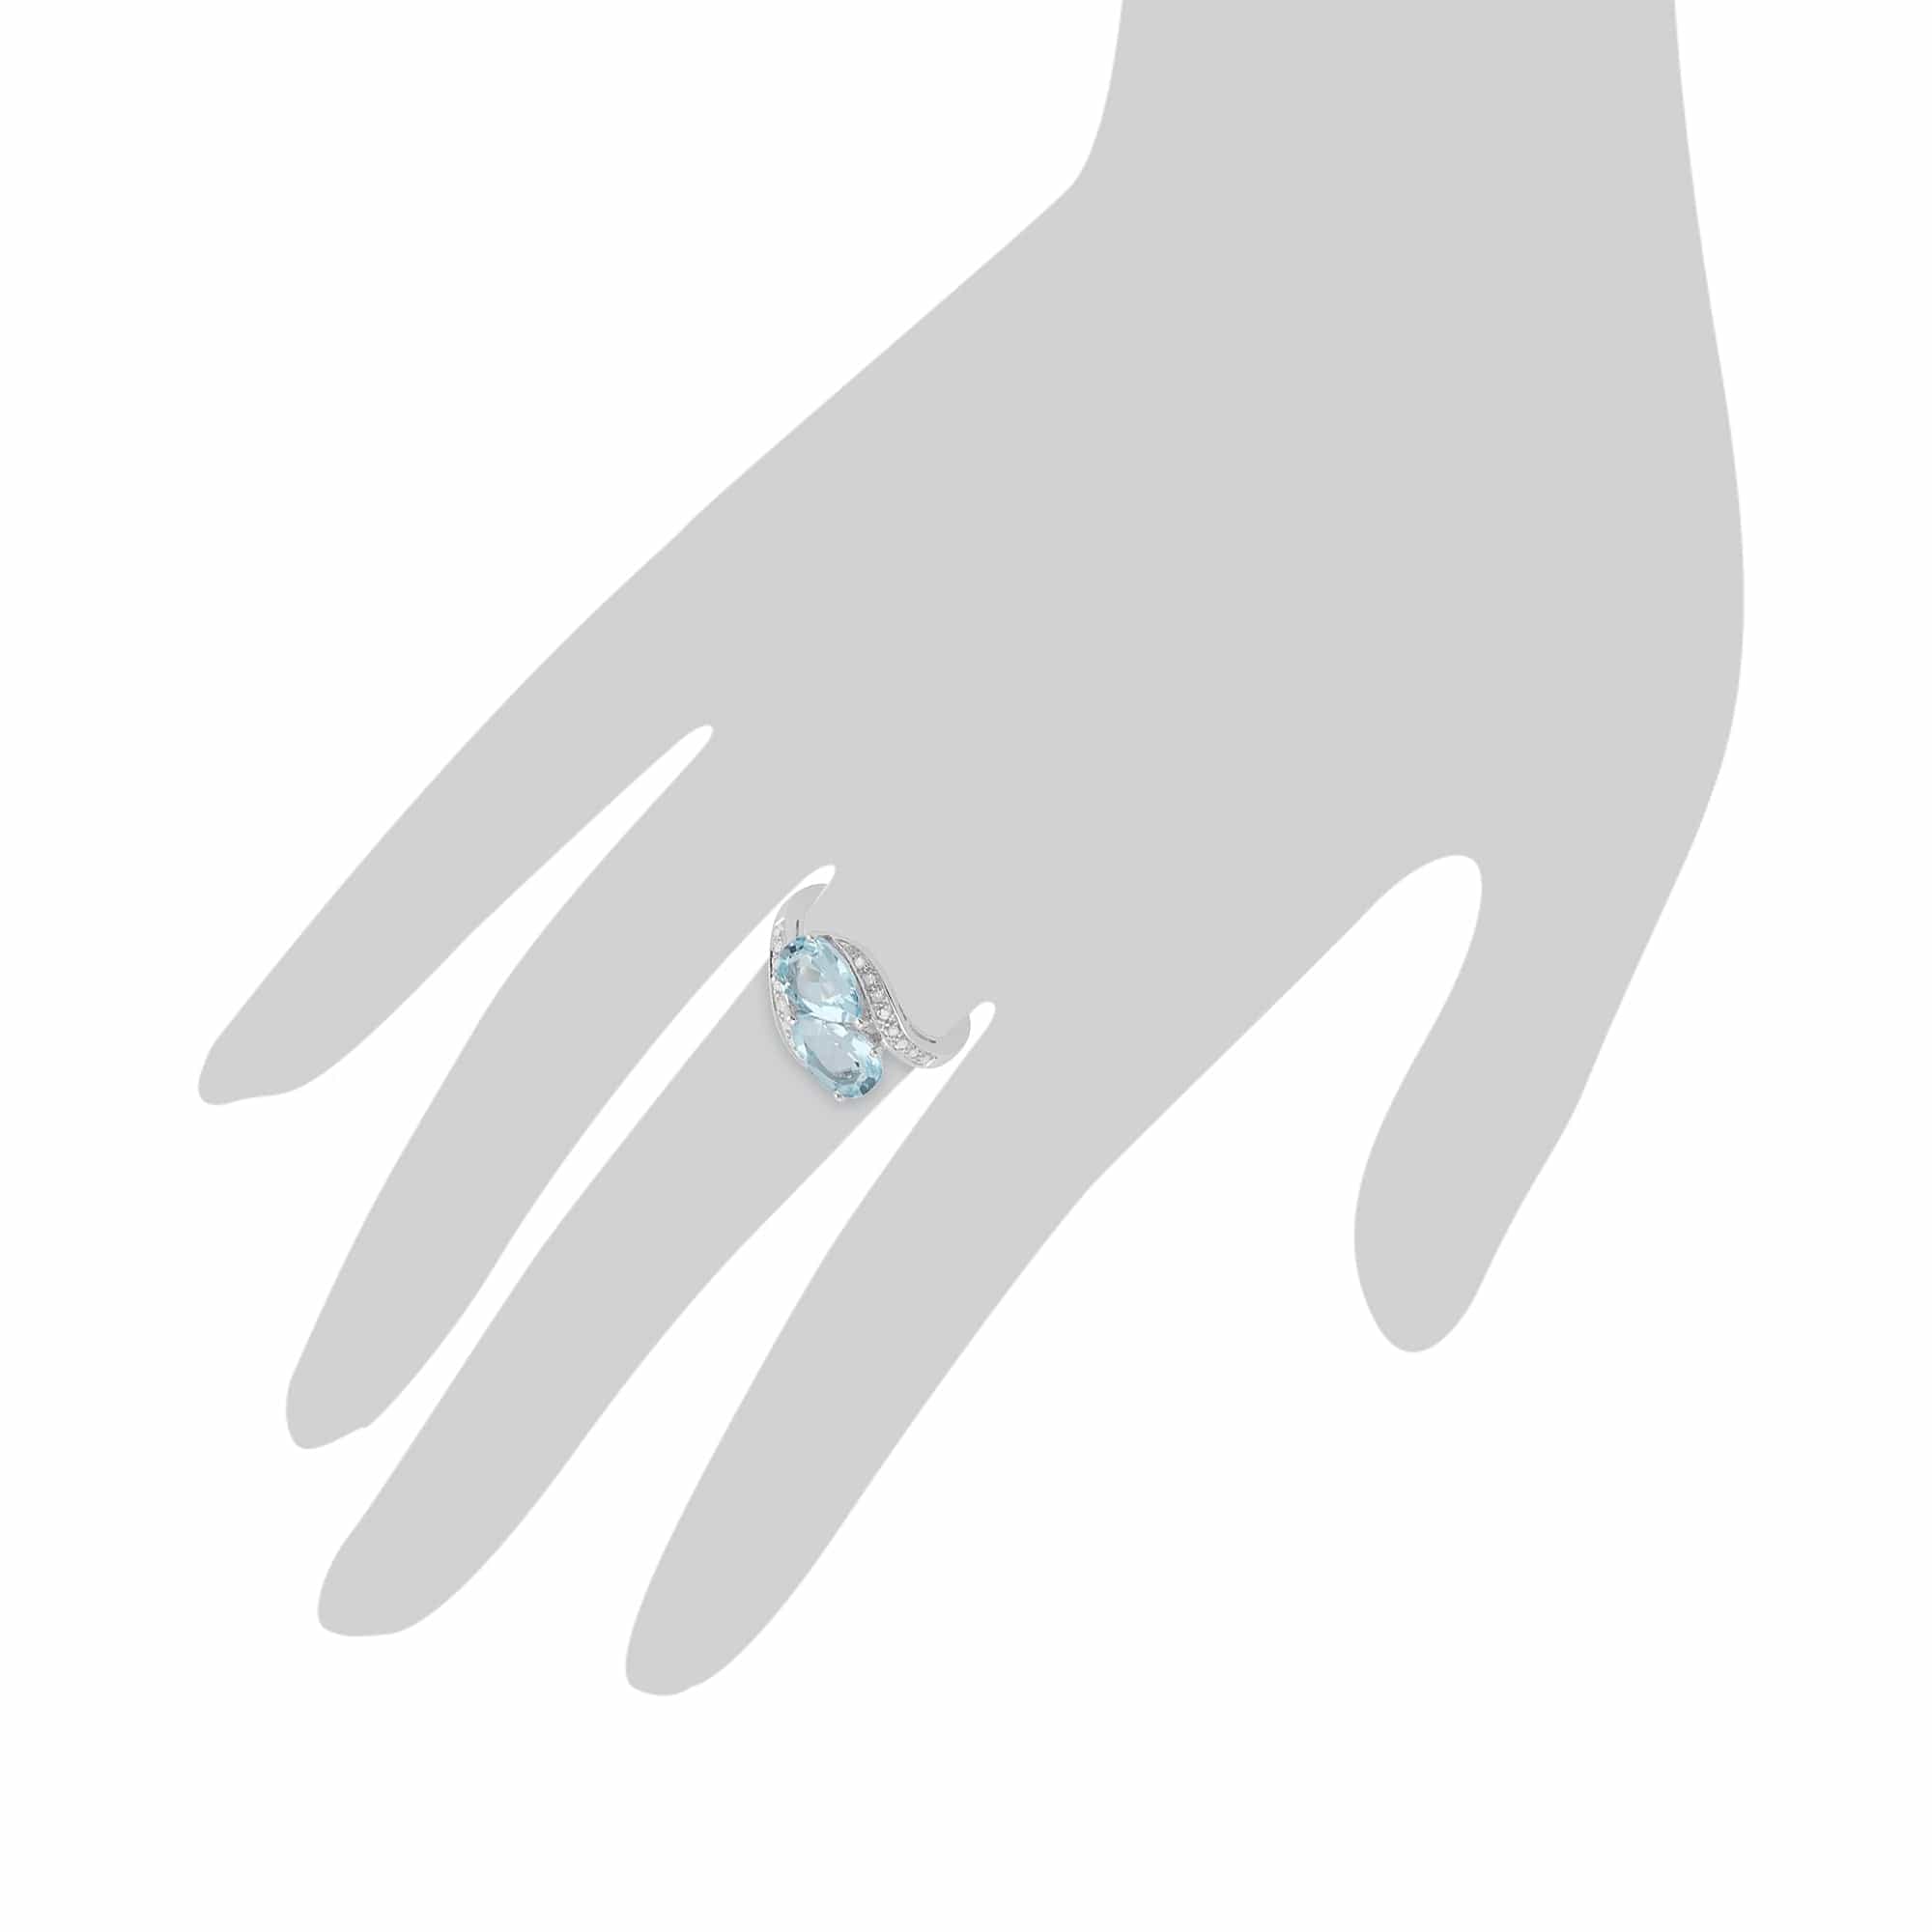 Gemondo 9ct White Gold 3.15ct Blue Topaz & Diamond Ring Image 3